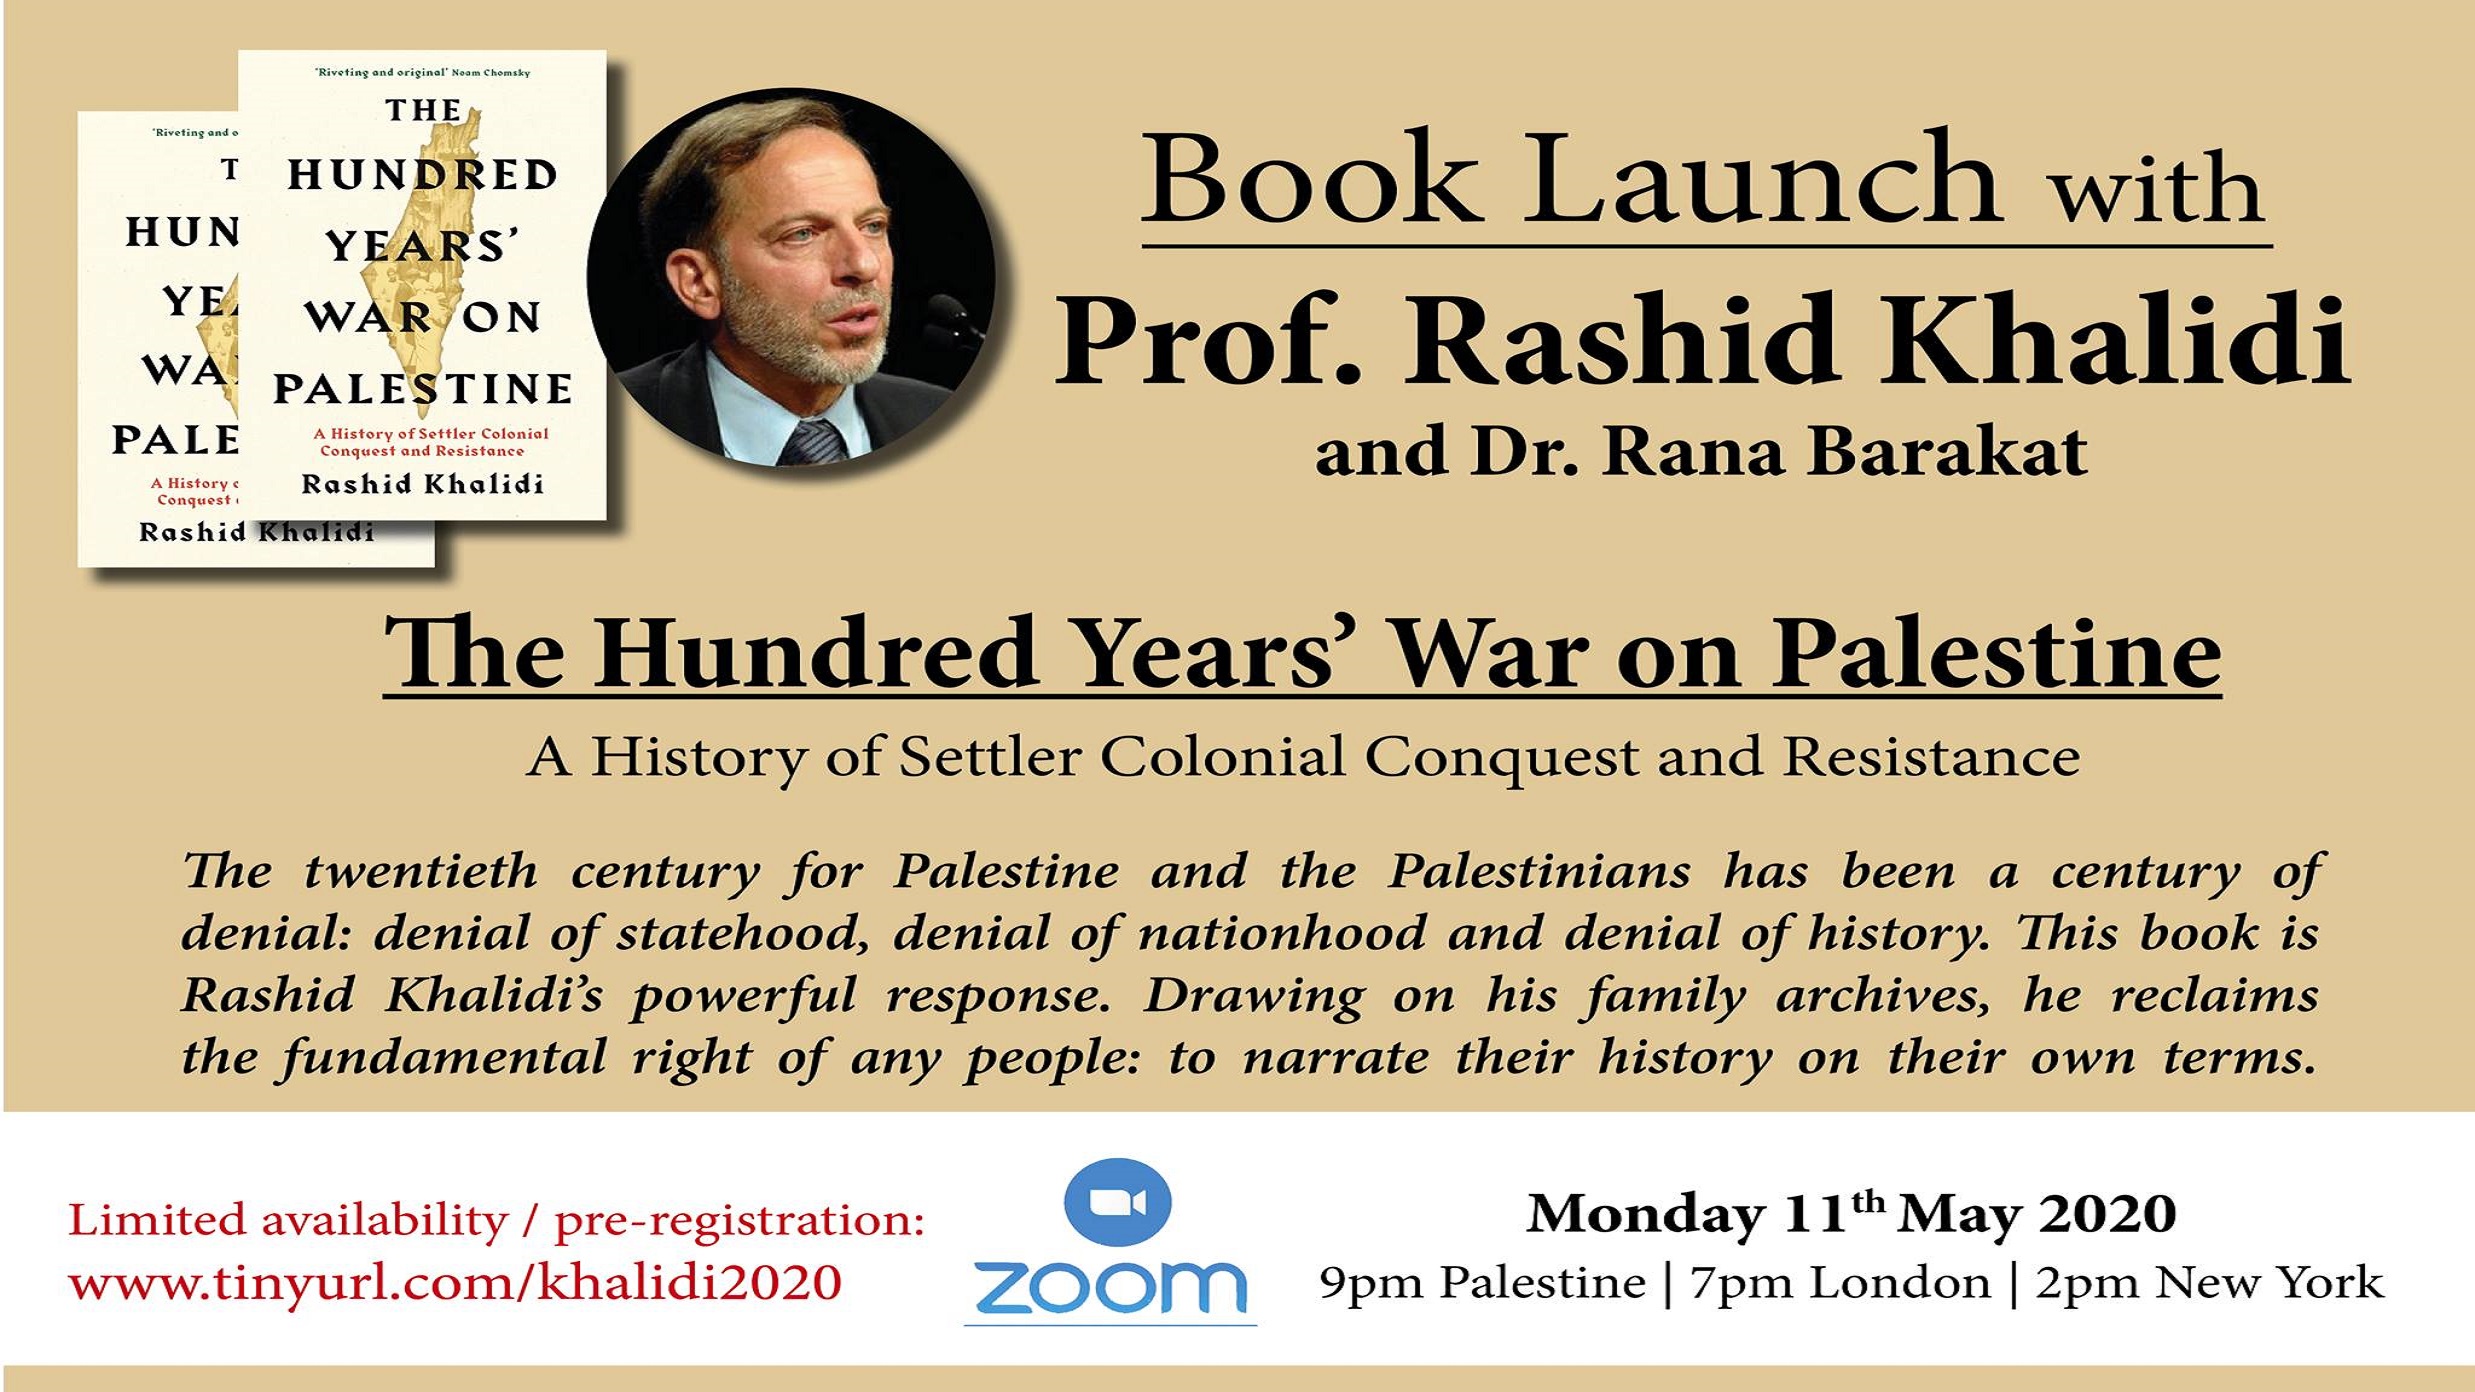 Book Launch with Prof. Rashid Khalidi